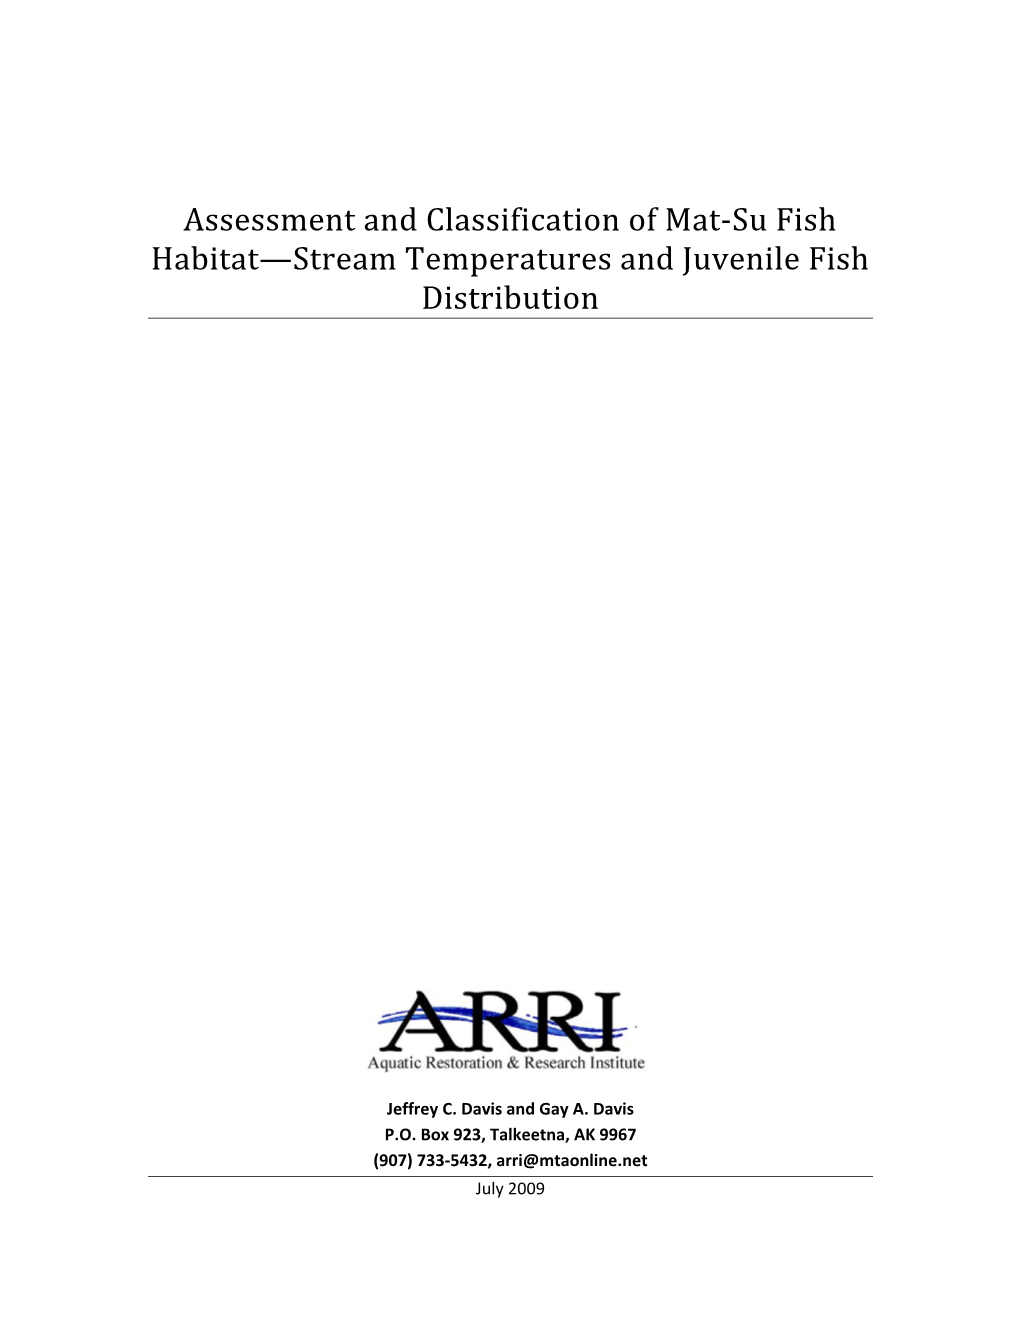 Assessment and Classification of Mat‐Su Fish Habitat—Stream Temperatures and Juvenile Fish Distribution